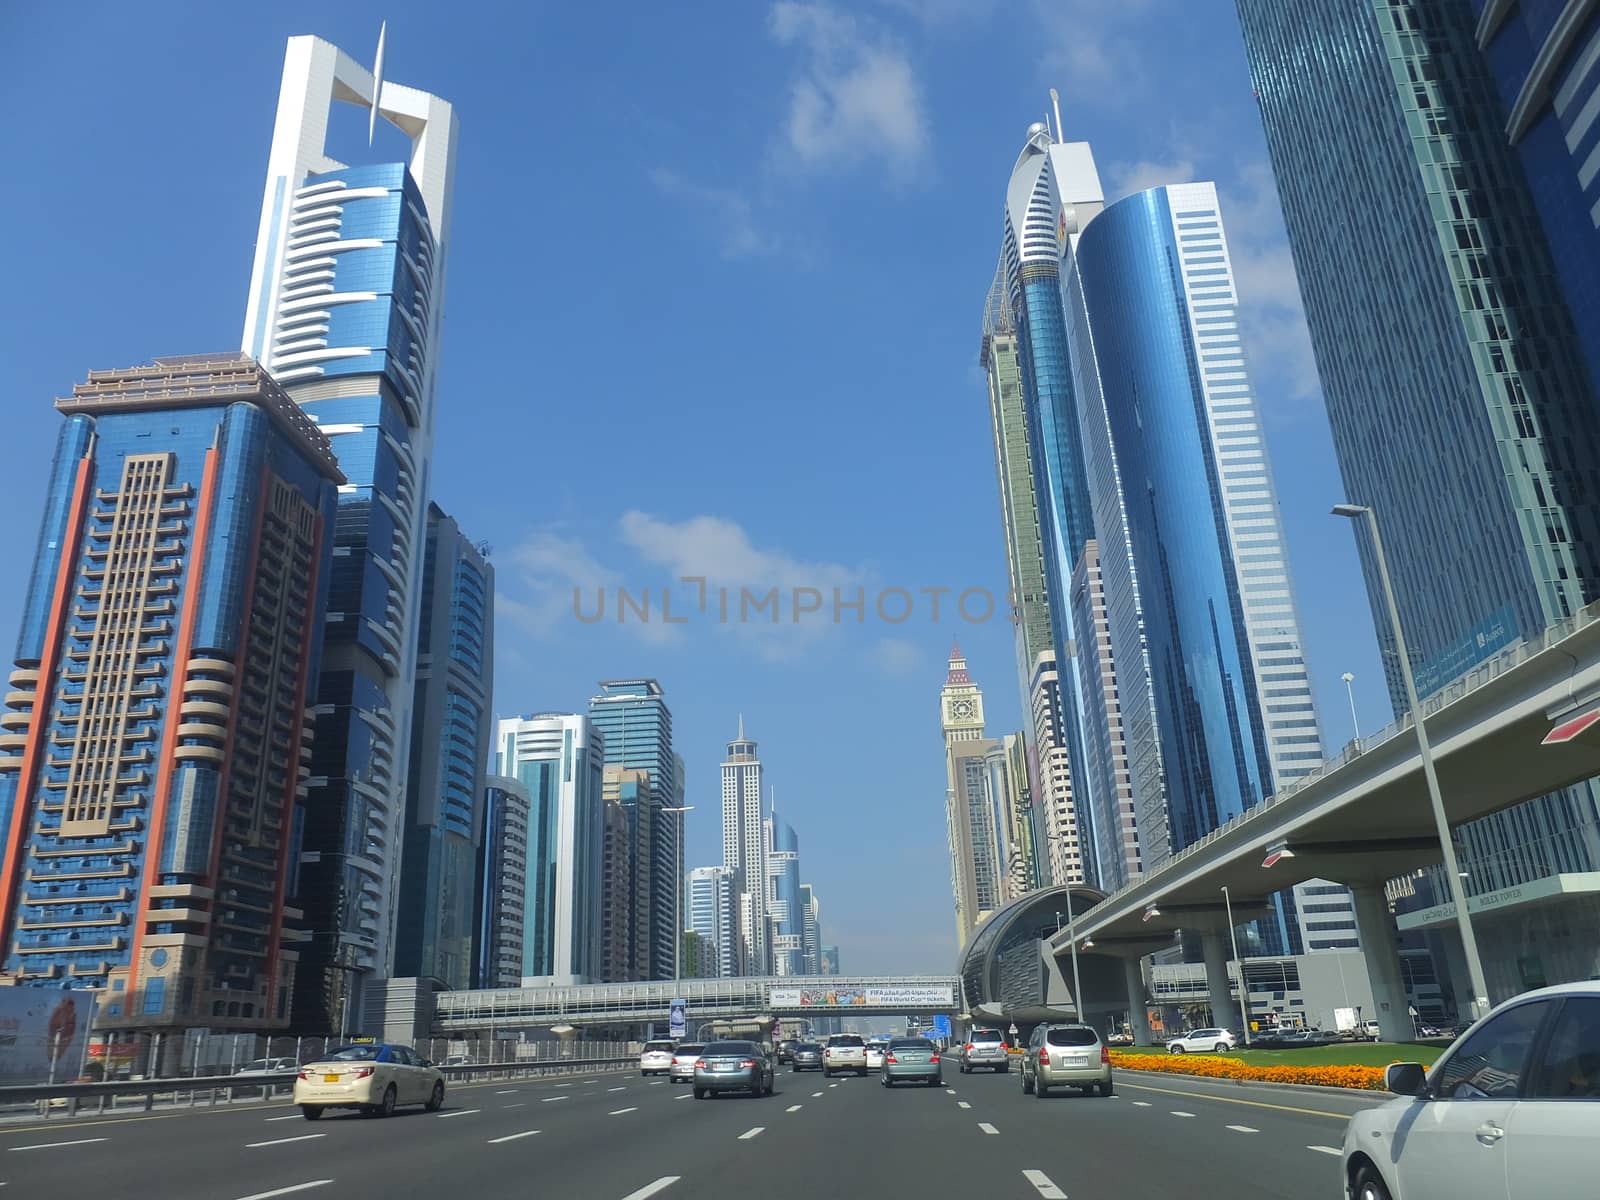 View of Sheikh Zayed Road skyscrapers in Dubai, UAE by sainaniritu